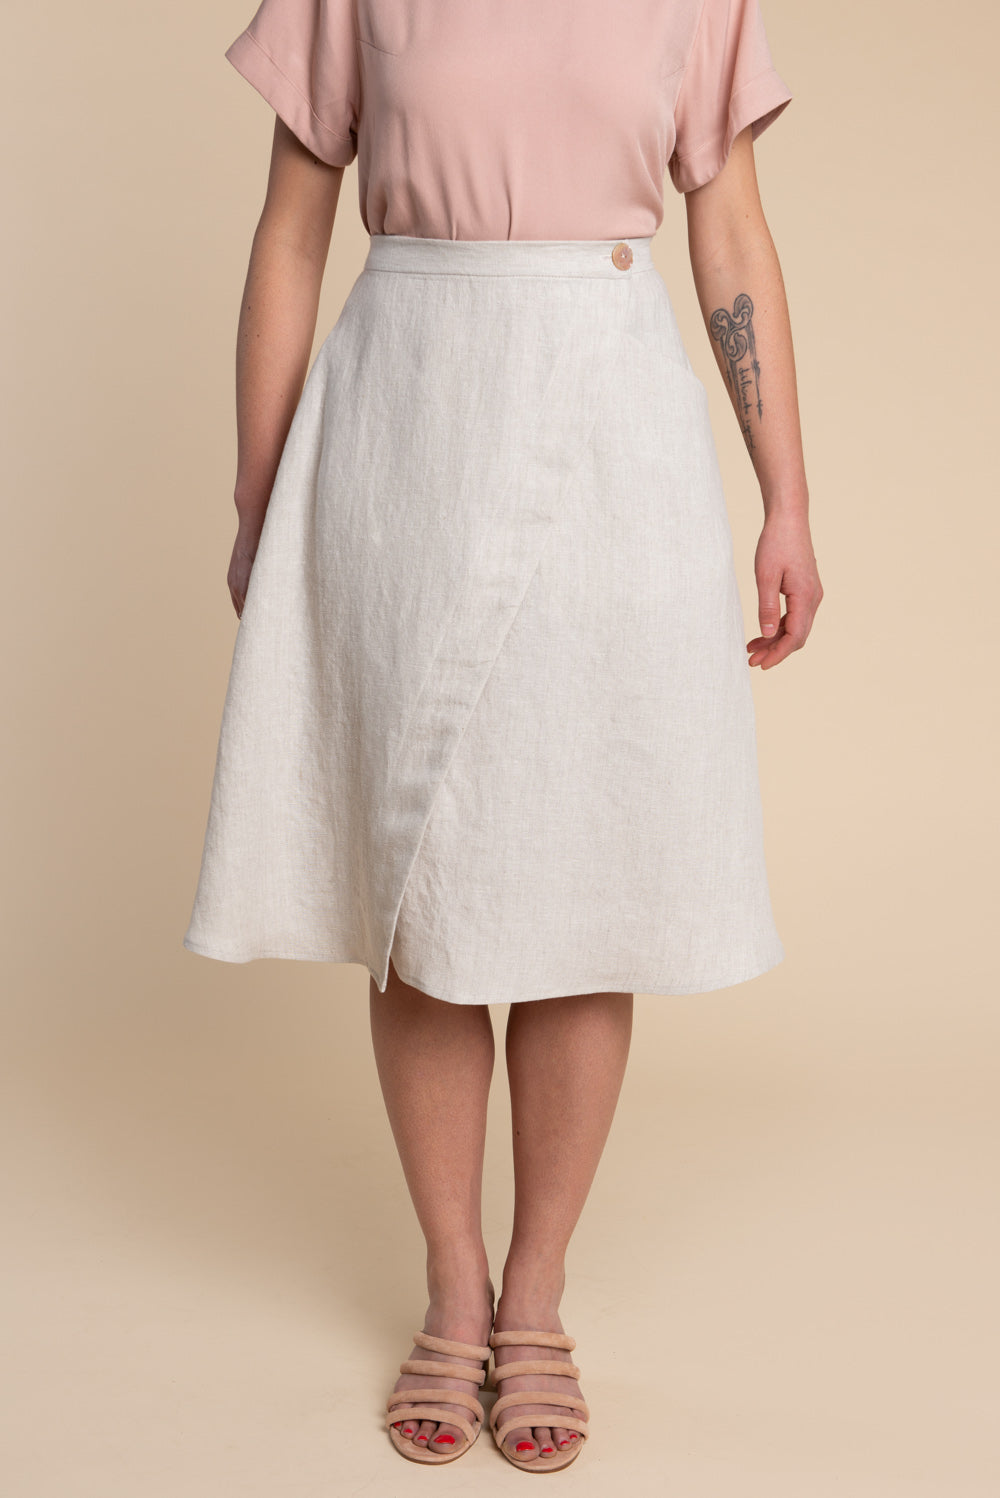 Fiore Skirt - Sizes 0-20 - Closet Core